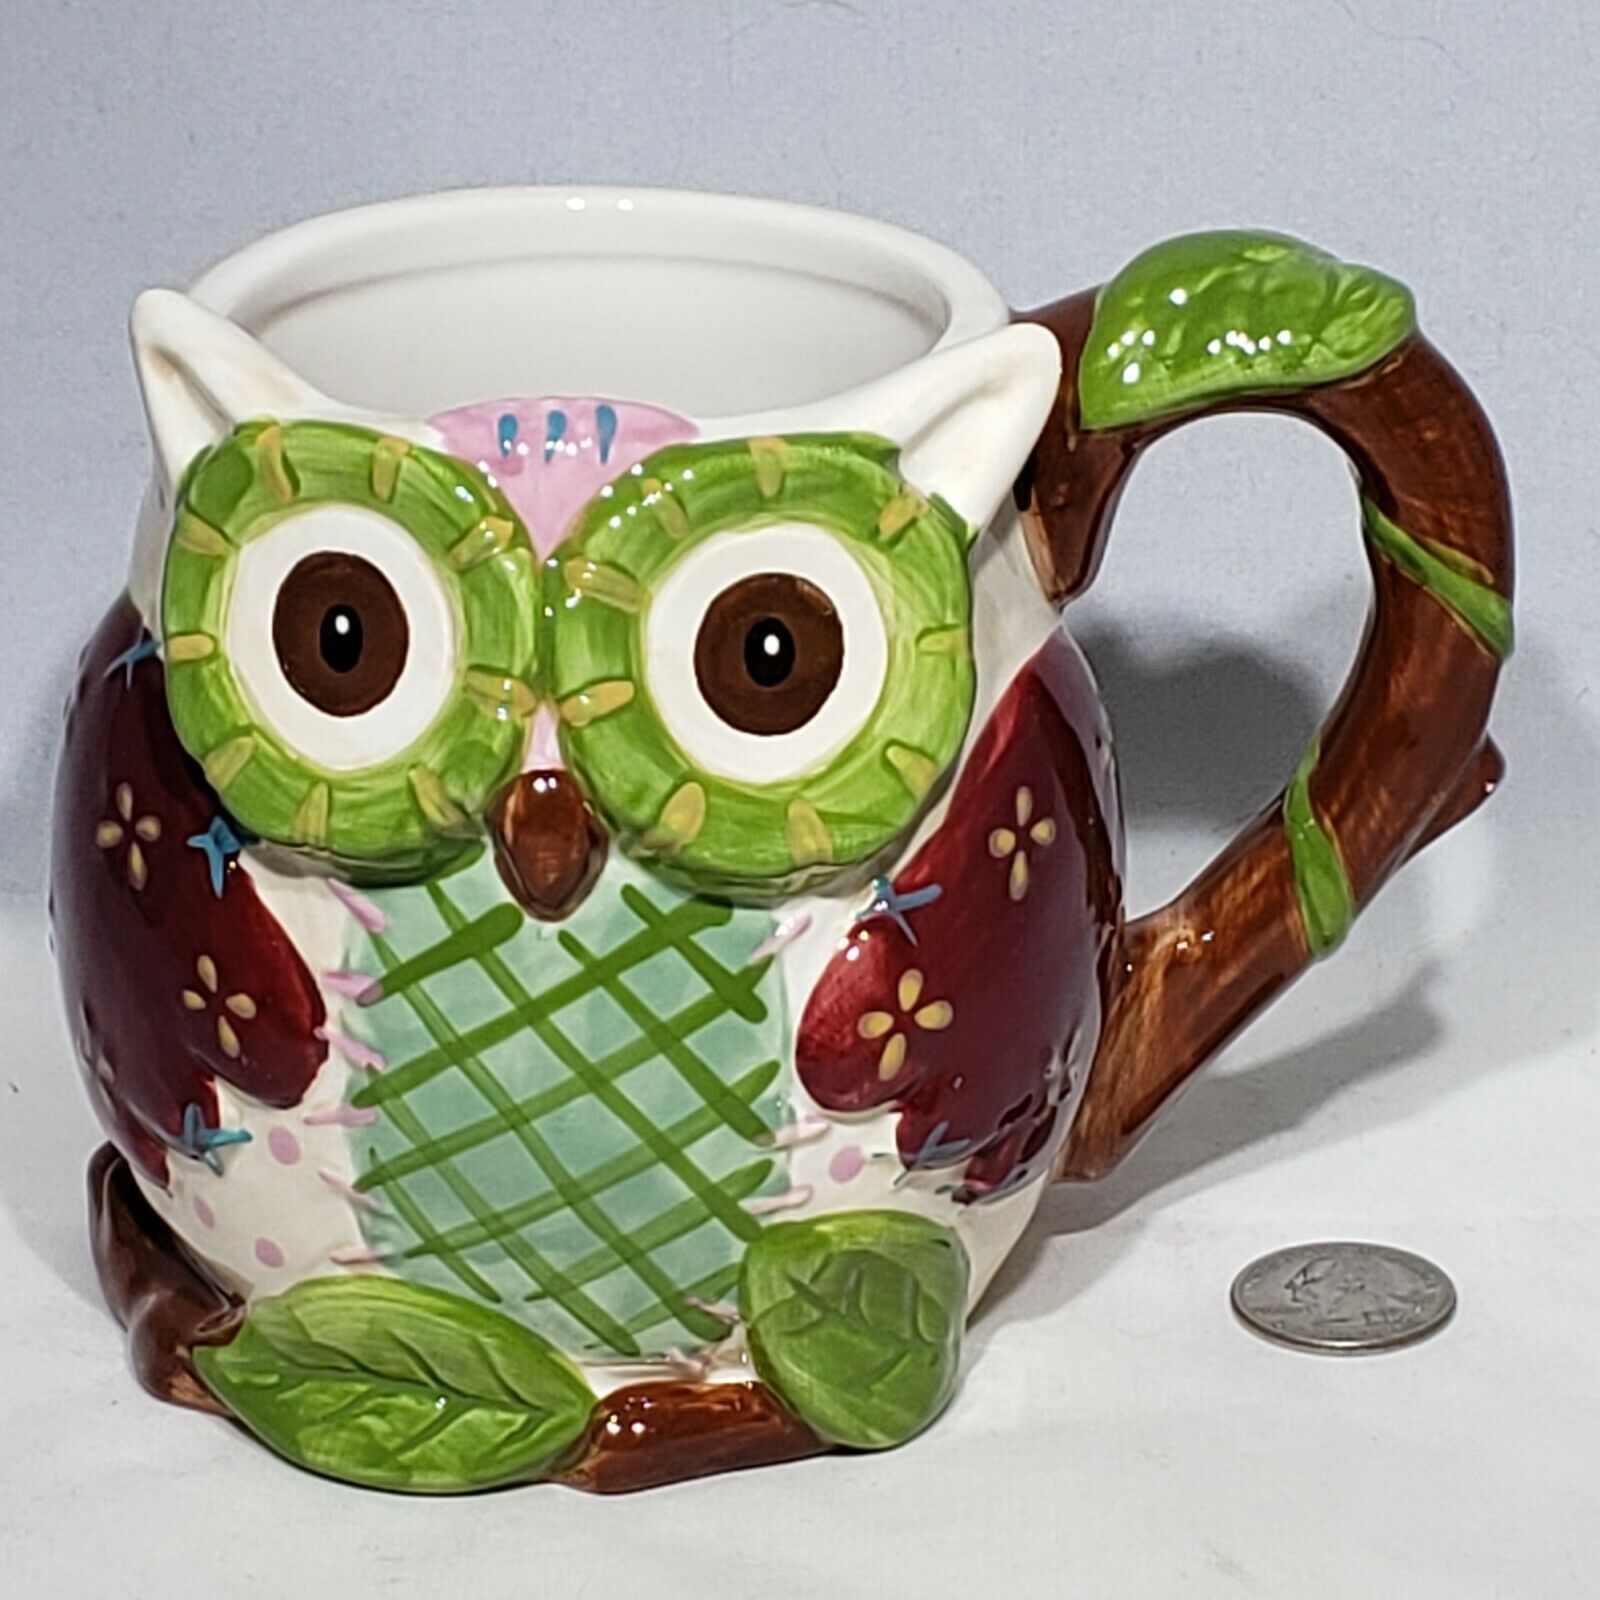 Primary image for Pier 1 Imports Olli the Owl Hand-Painted Dolomite Ceramic 24 oz Mug EUC